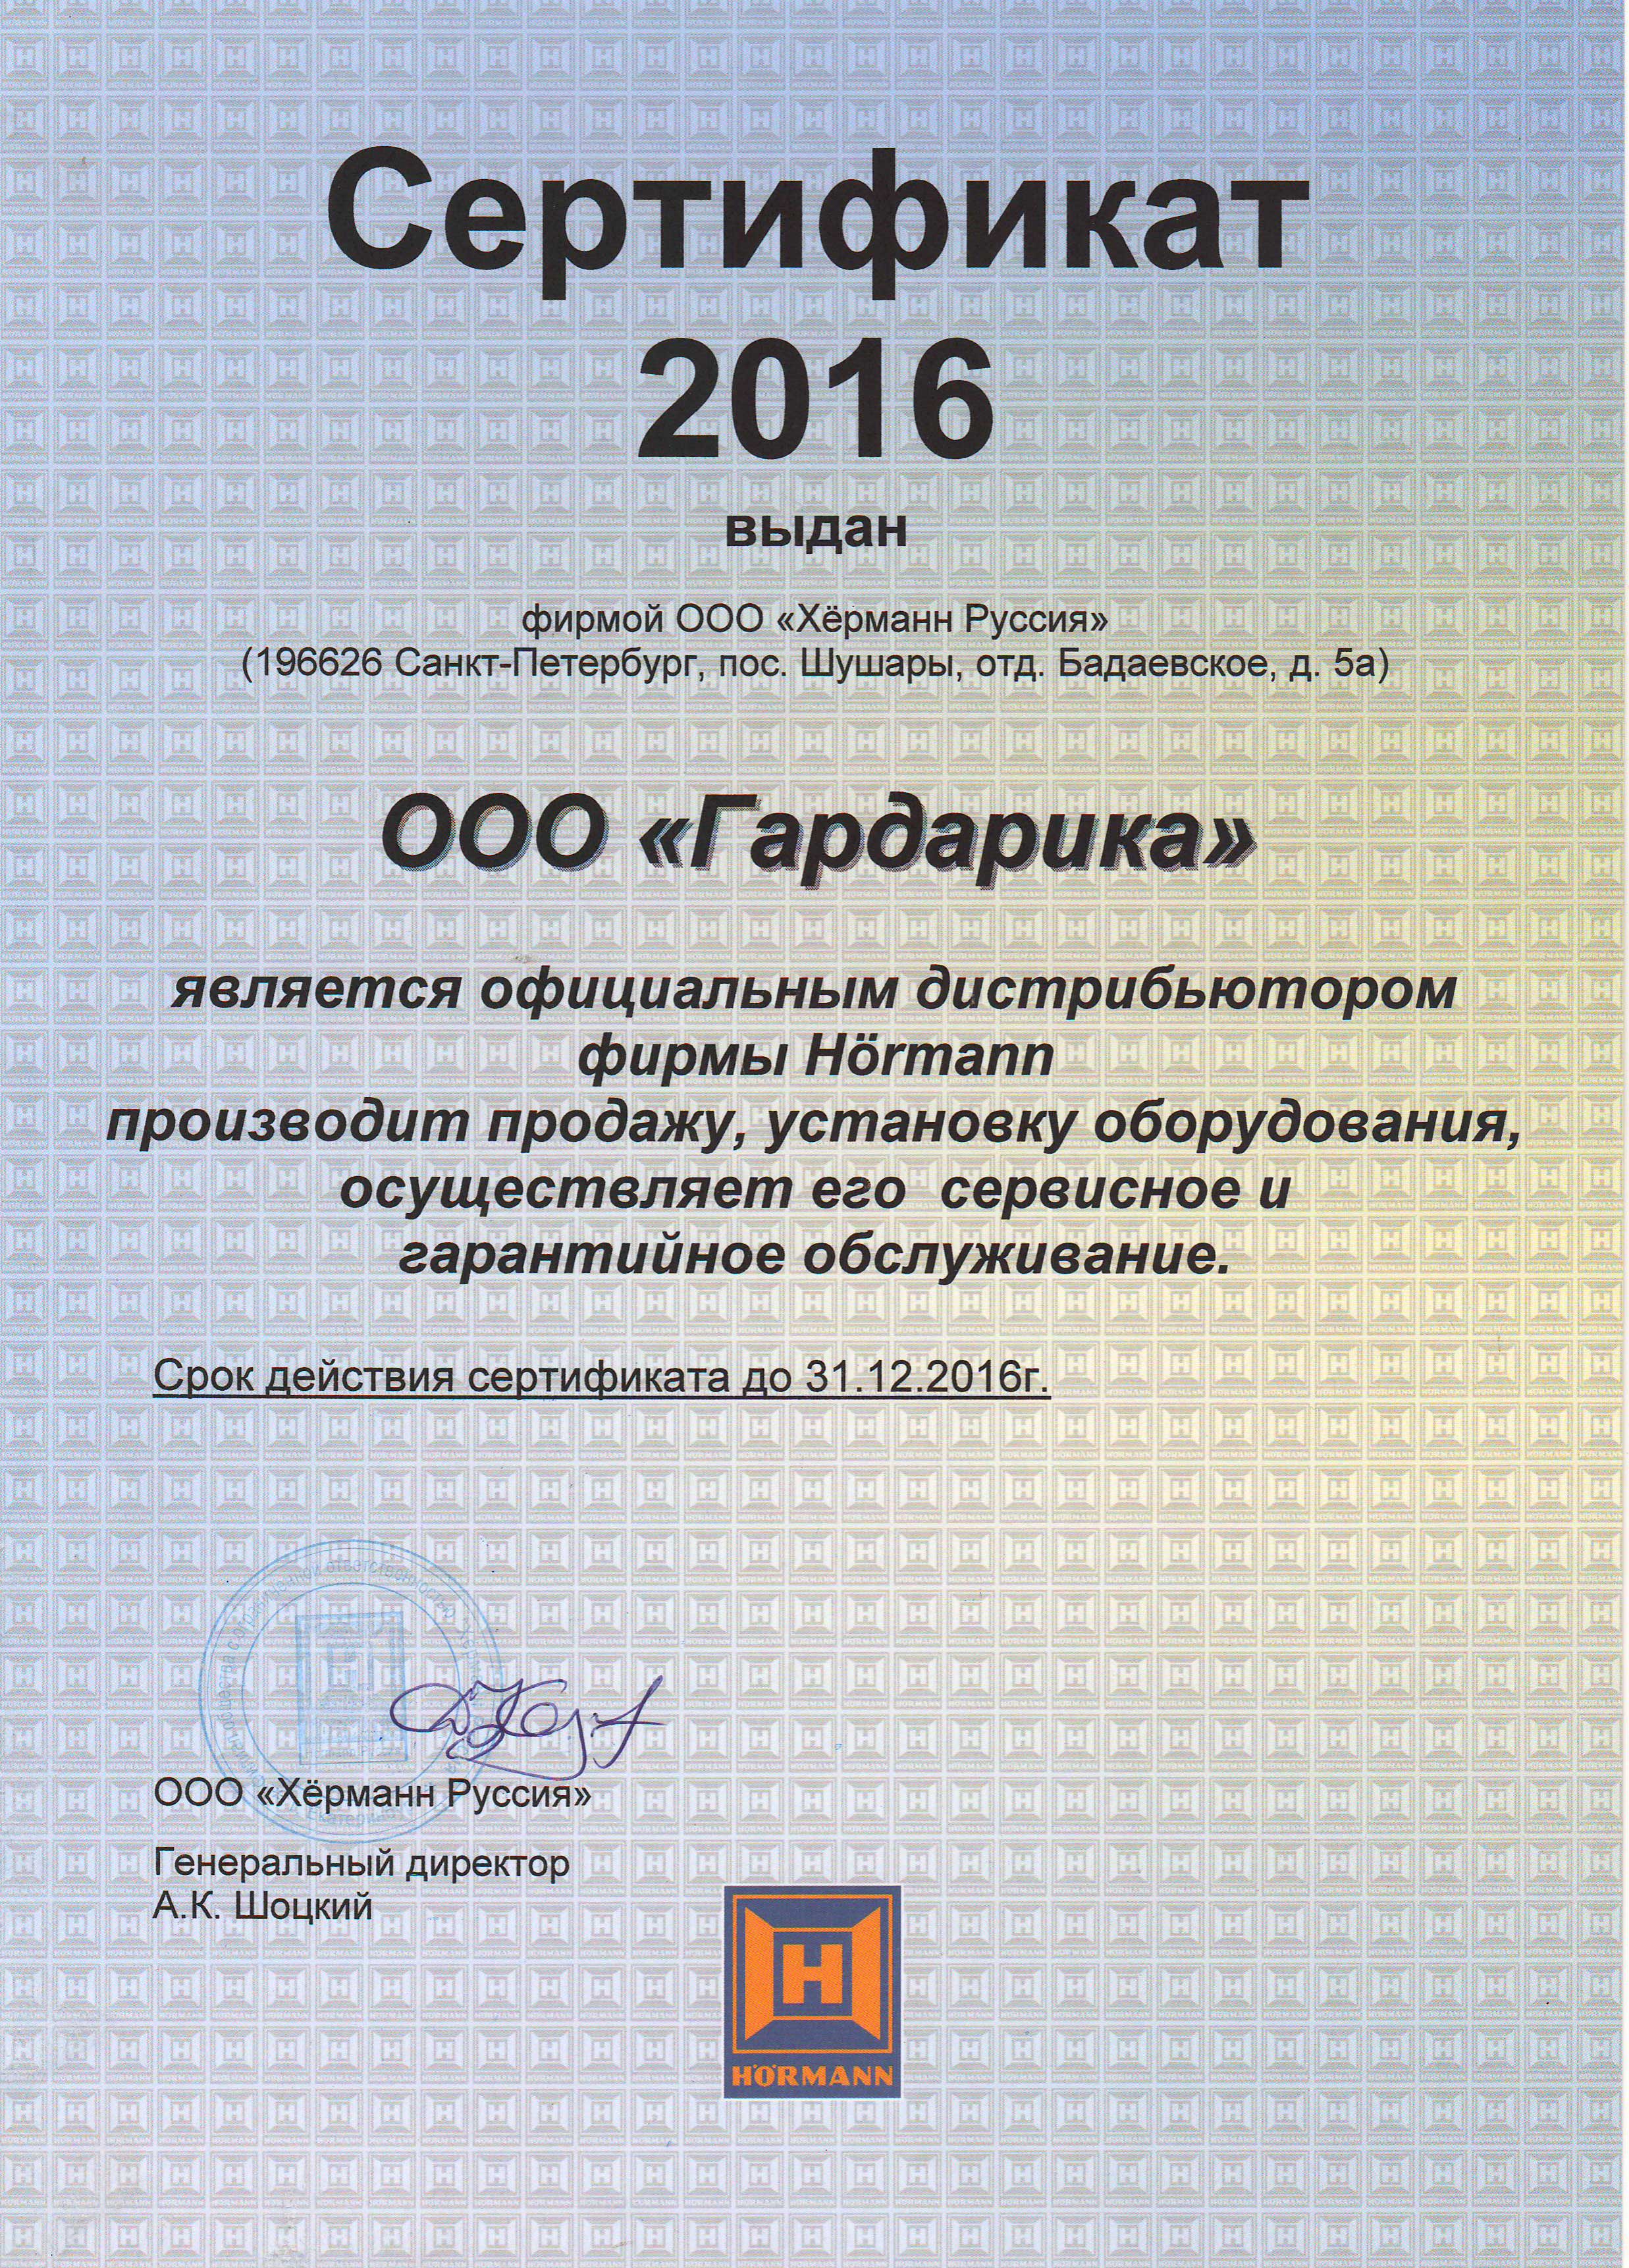 Сертификат дистрибьютора Hormann 2016